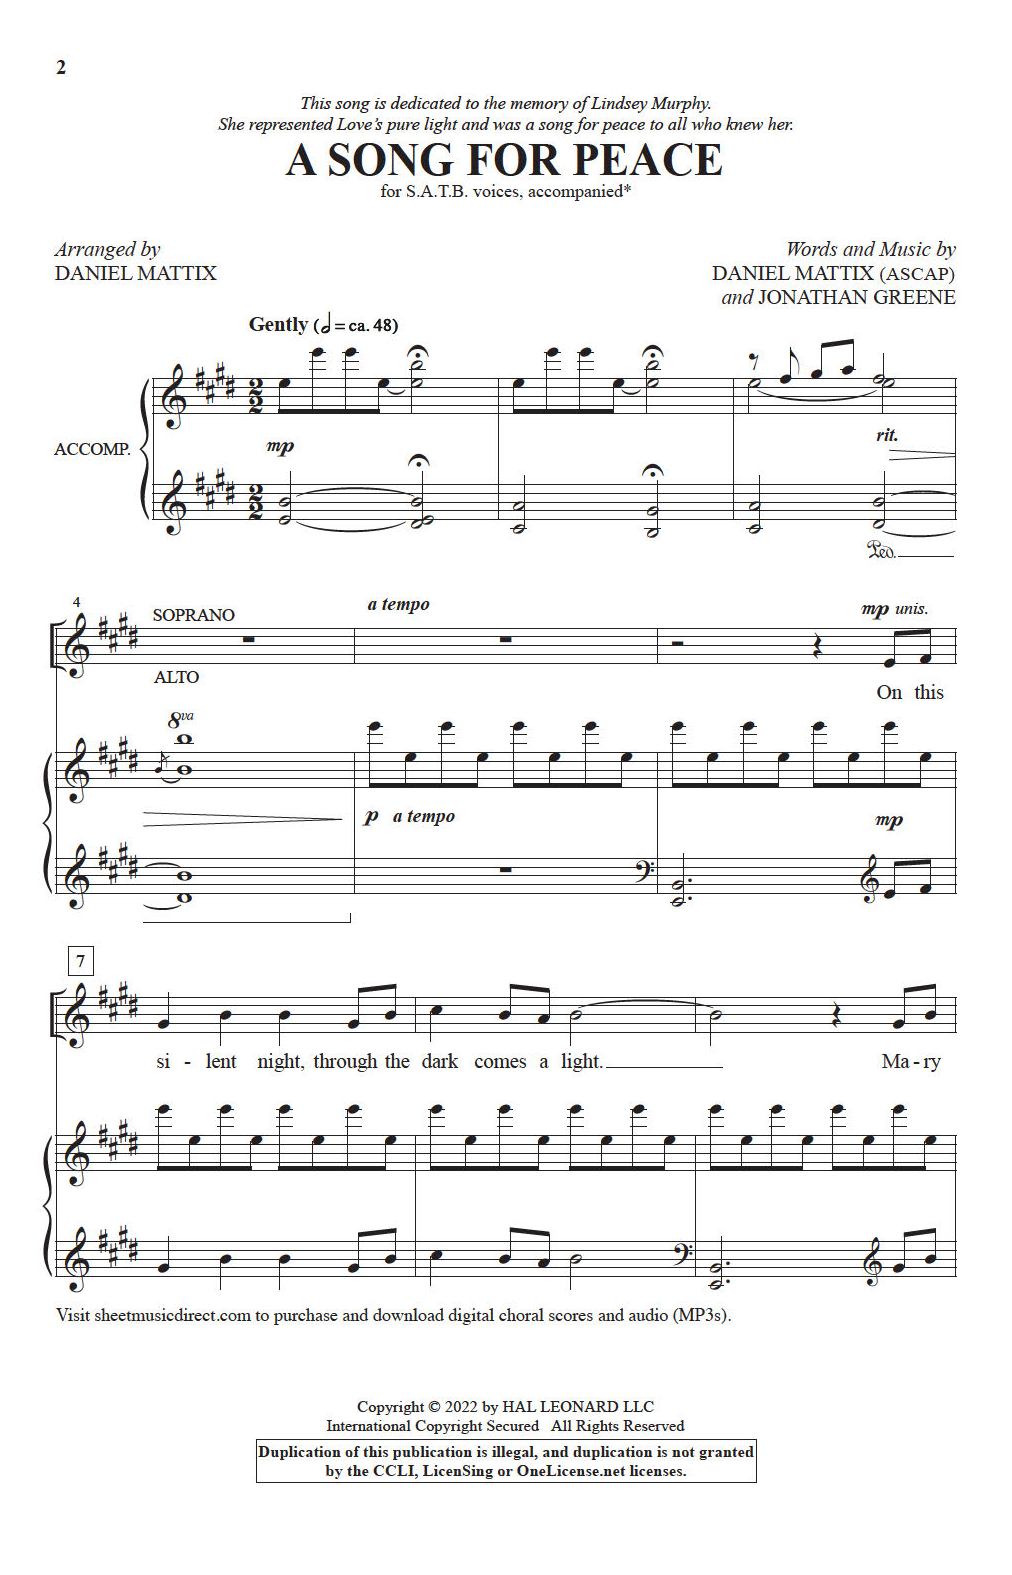 Download Daniel Mattix and Jonathan Greene A Song For Peace (arr. Daniel Mattix) Sheet Music and learn how to play SATB Choir PDF digital score in minutes